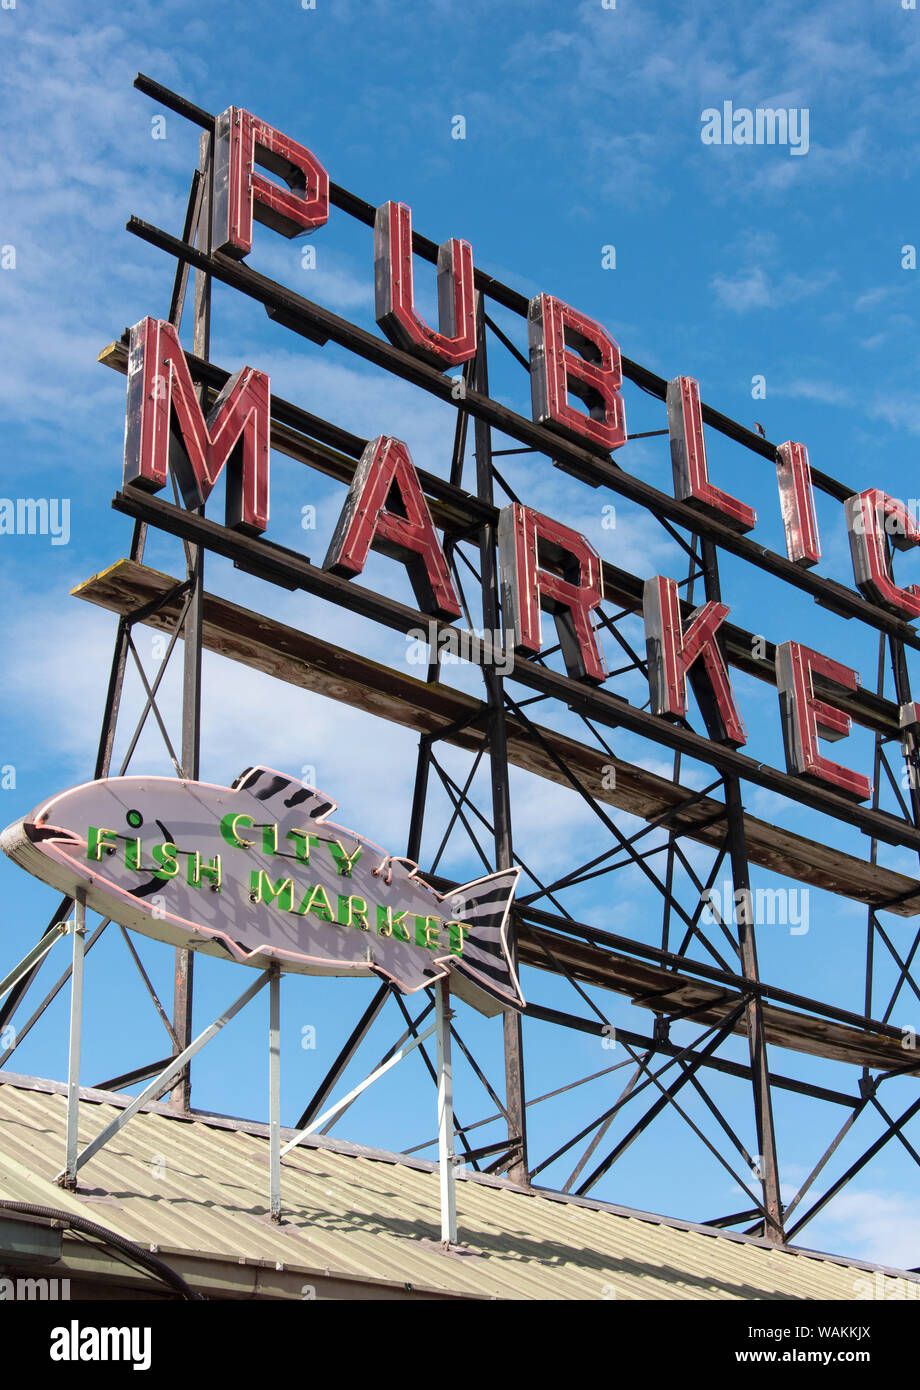 USA, Washington State, Seattle. Pike Place Market sign against brilliant blue sky Stock Photo